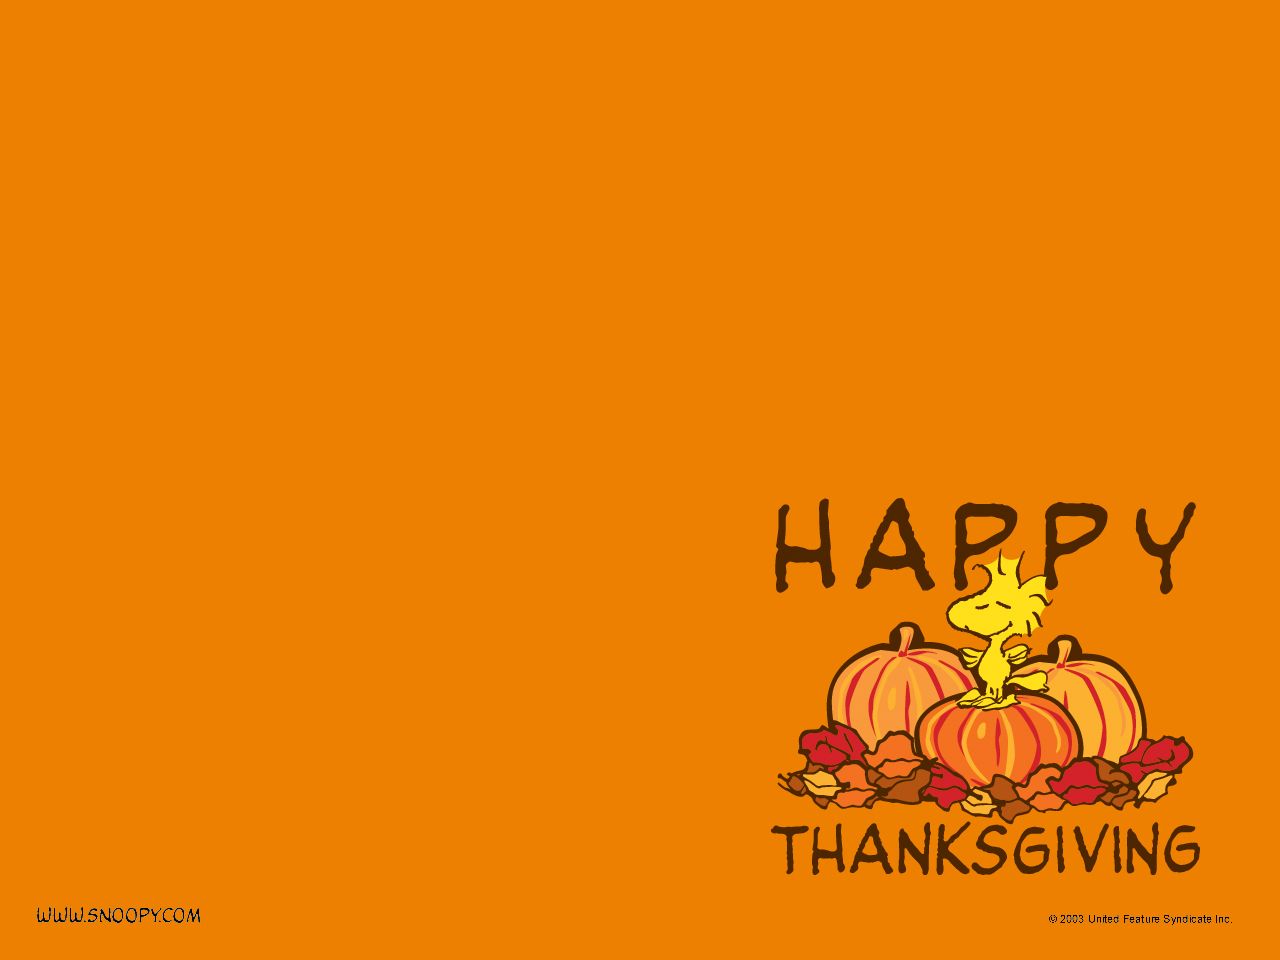 Thanksgiving - Peanuts Wallpaper (452774) - Fanpop